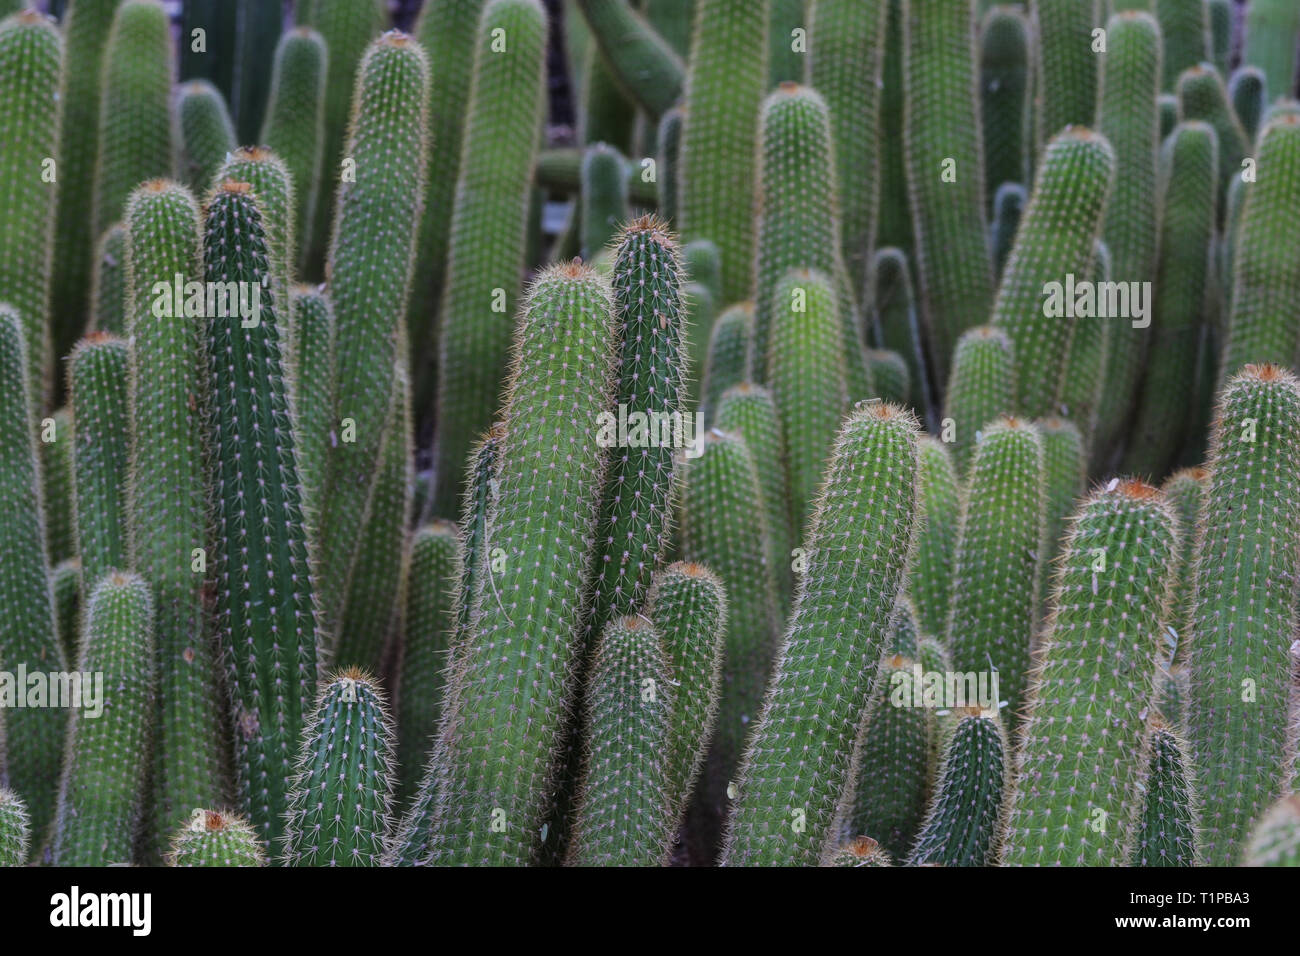 Cluster of Red Torch cactus (echinopsis husascha), growing in Arizona's Sonoran desert. Stock Photo